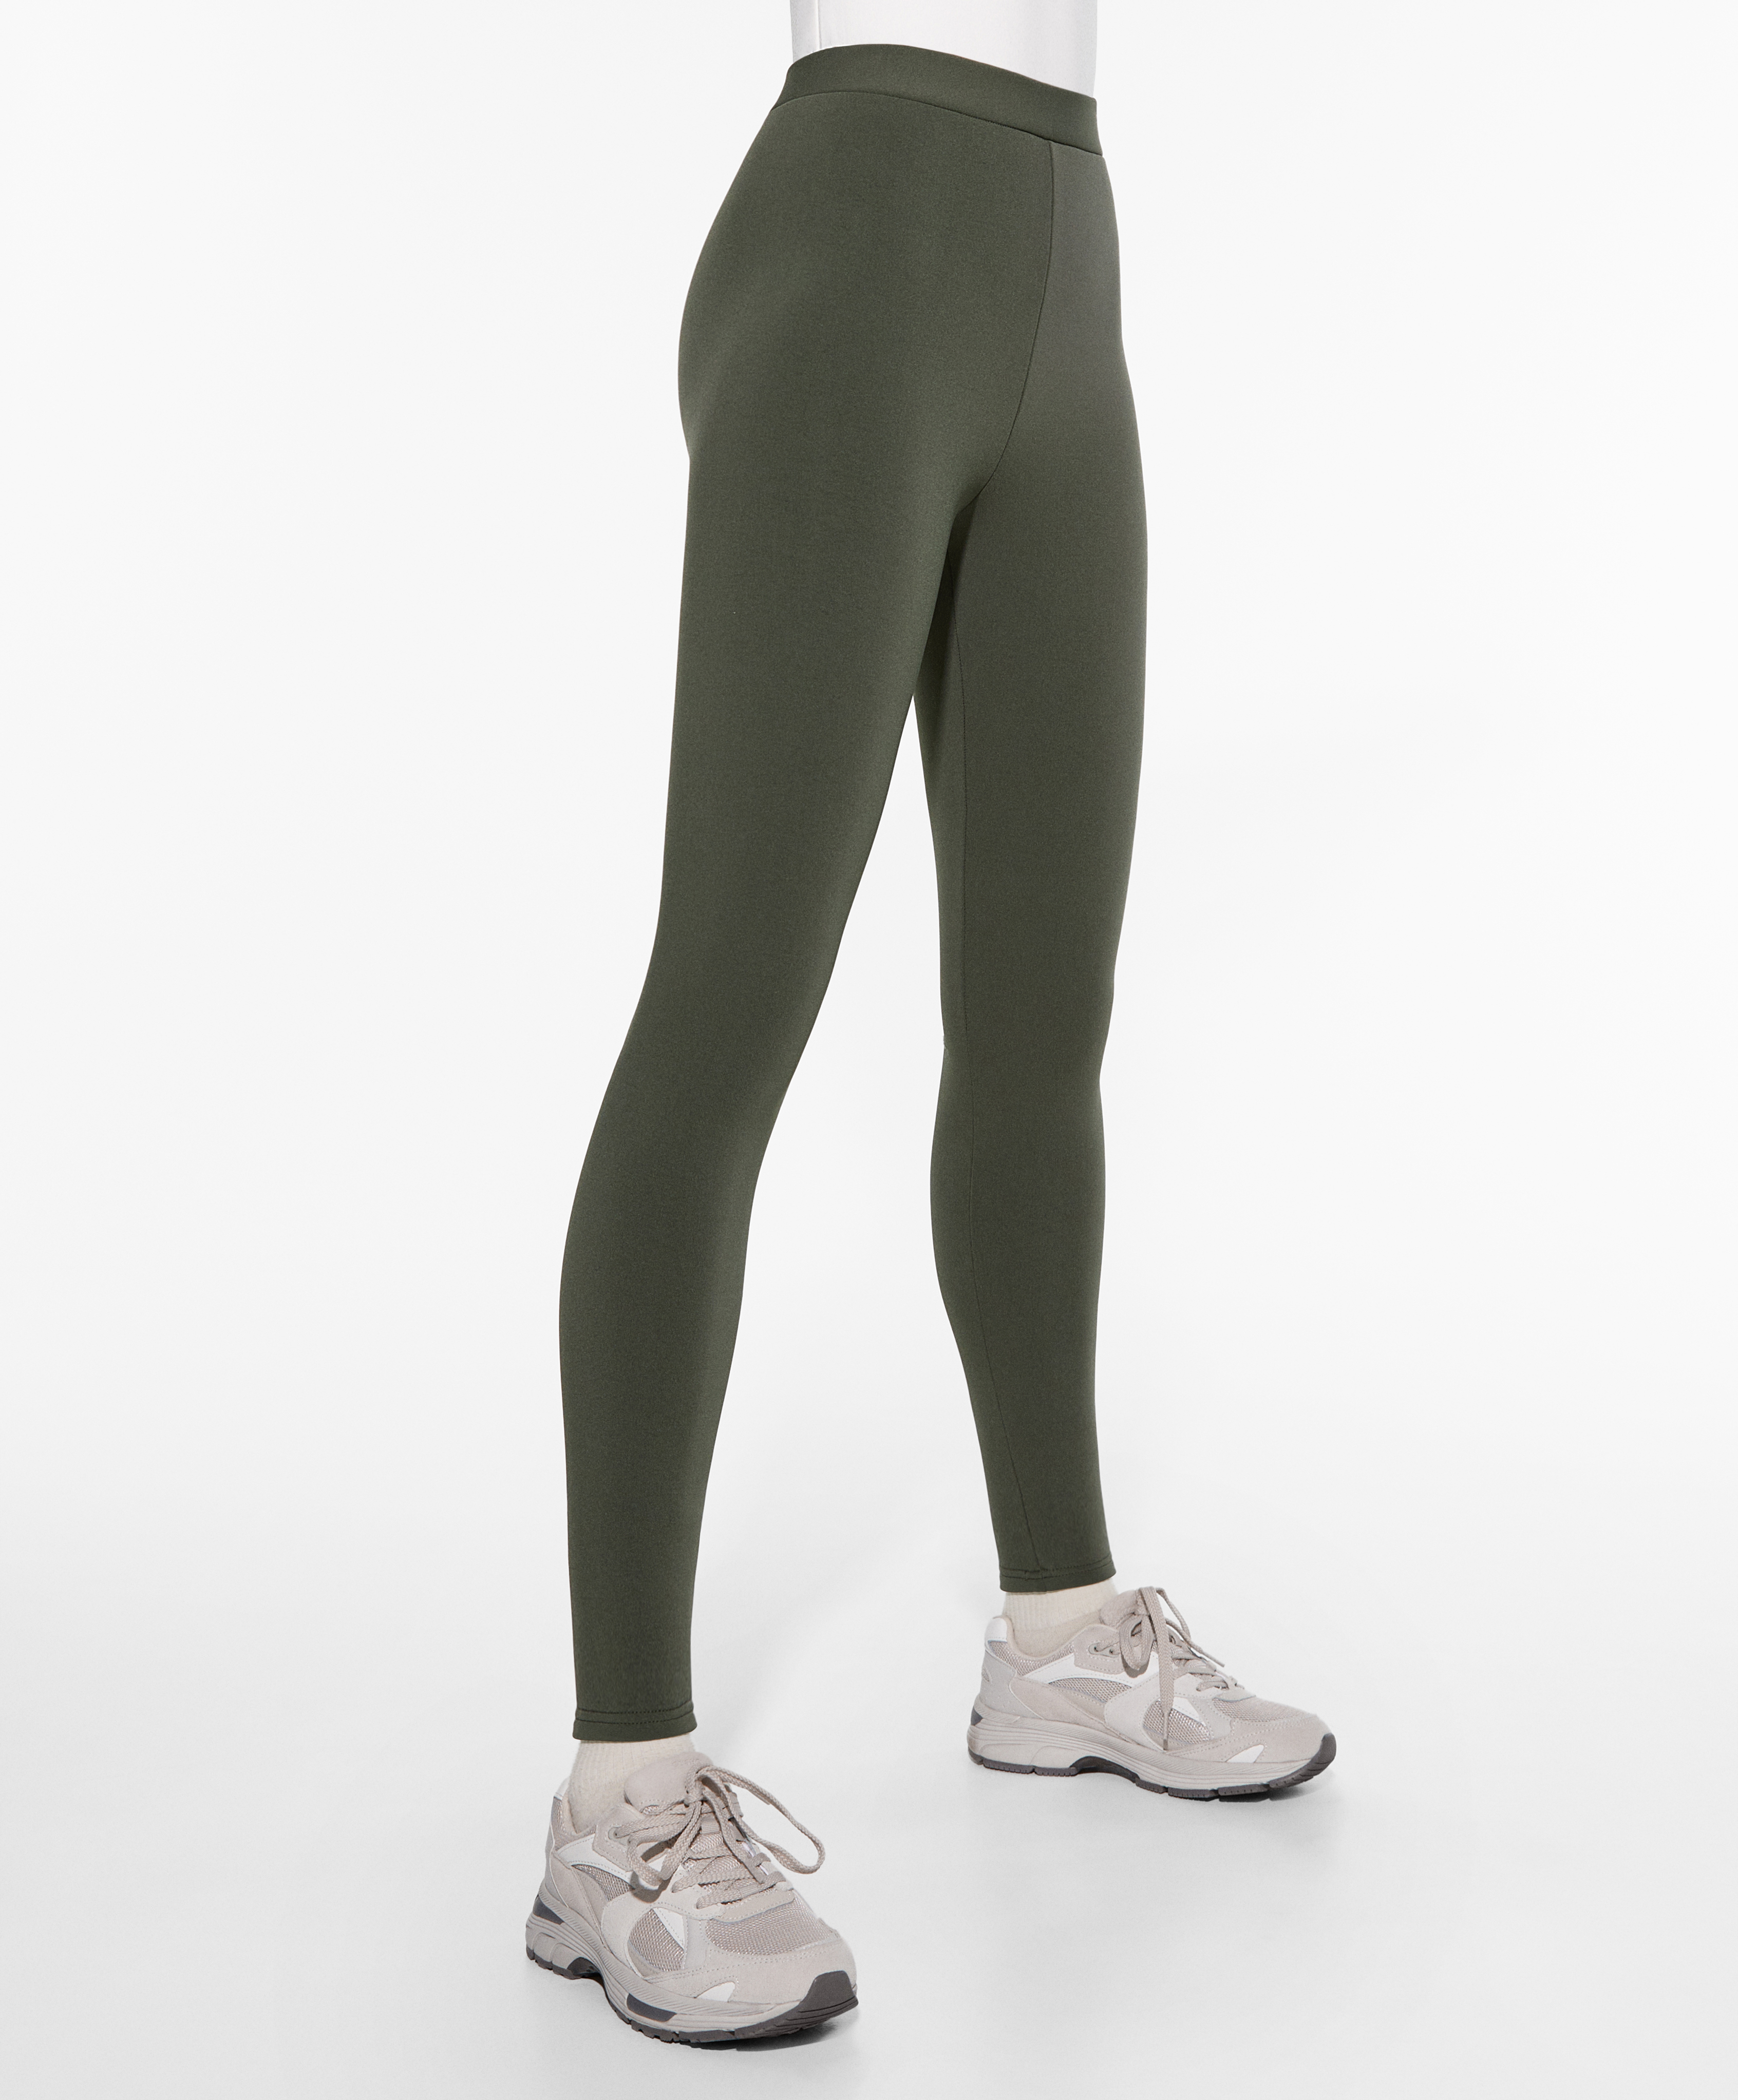 Super extra warm seamless 65cm ankle-length leggings